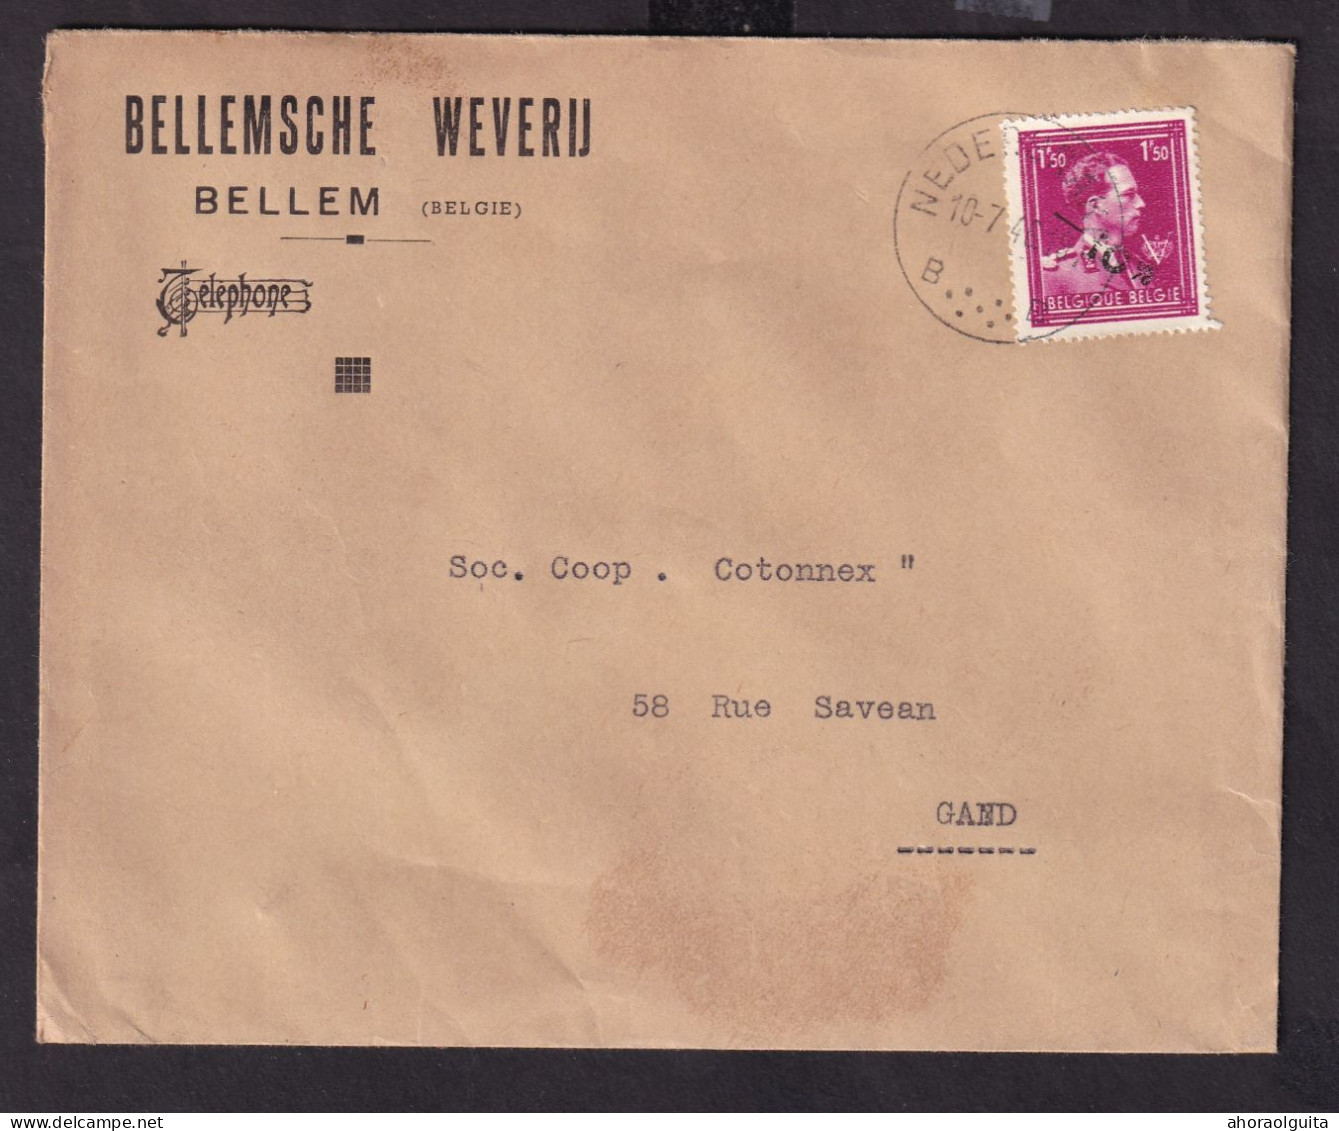 DDEE 786 -- 2 X Enveloppe TP Moins 10 % Surcharge Locale NEDERBRAKEL 1946 - Entete Bellemsche Weverij - 1946 -10%